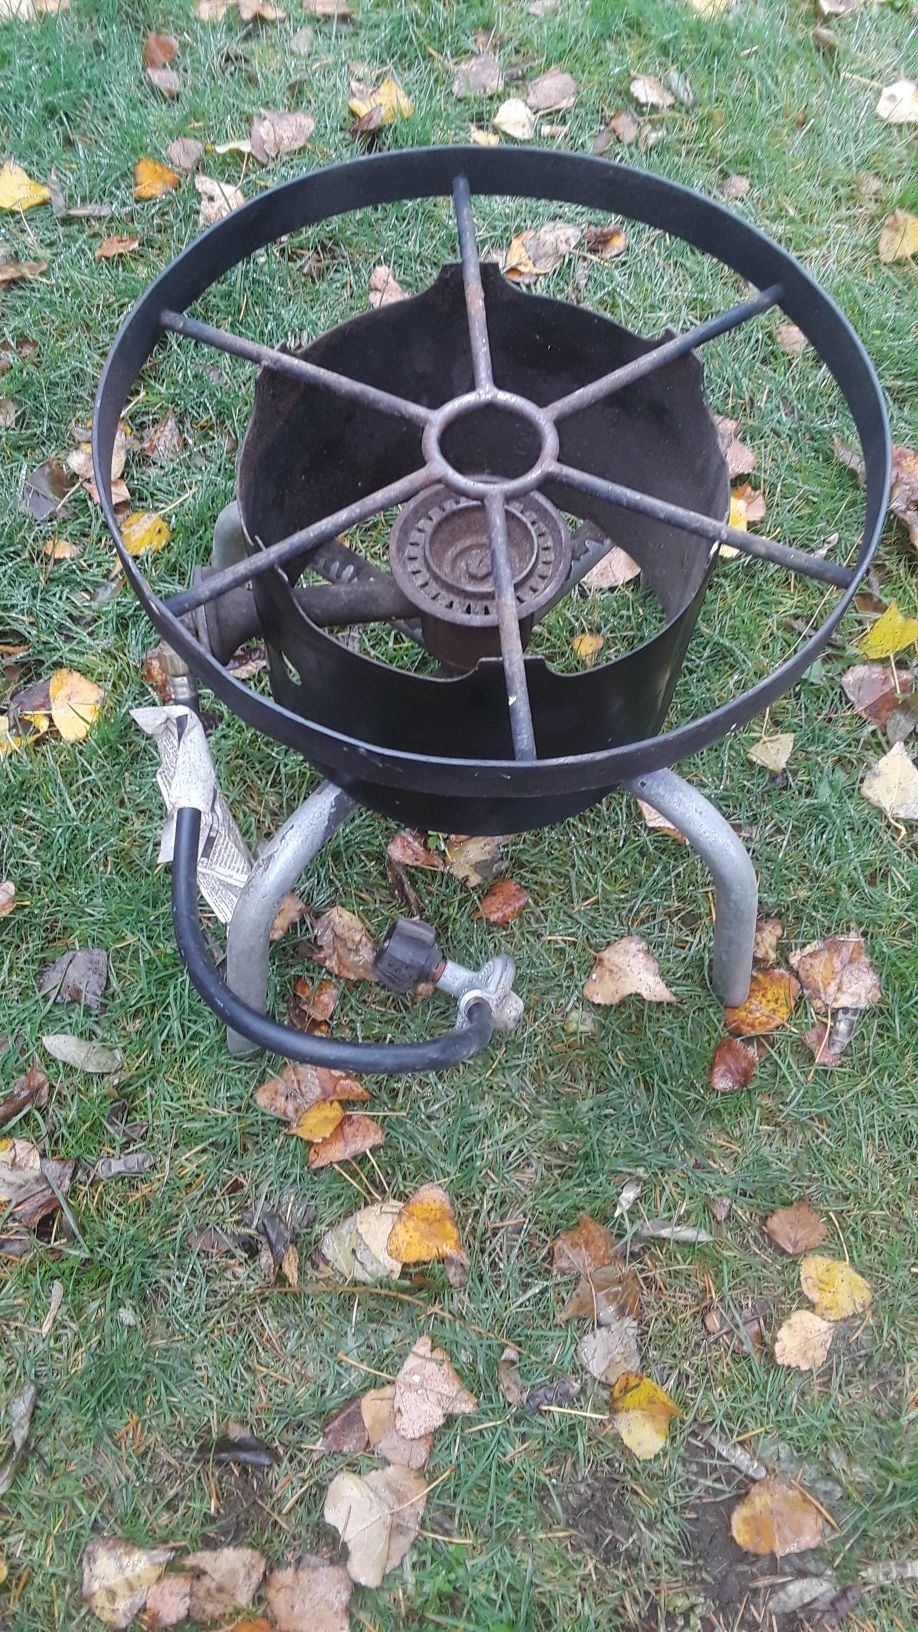 Large Outdoor Cooking Burner - Propane